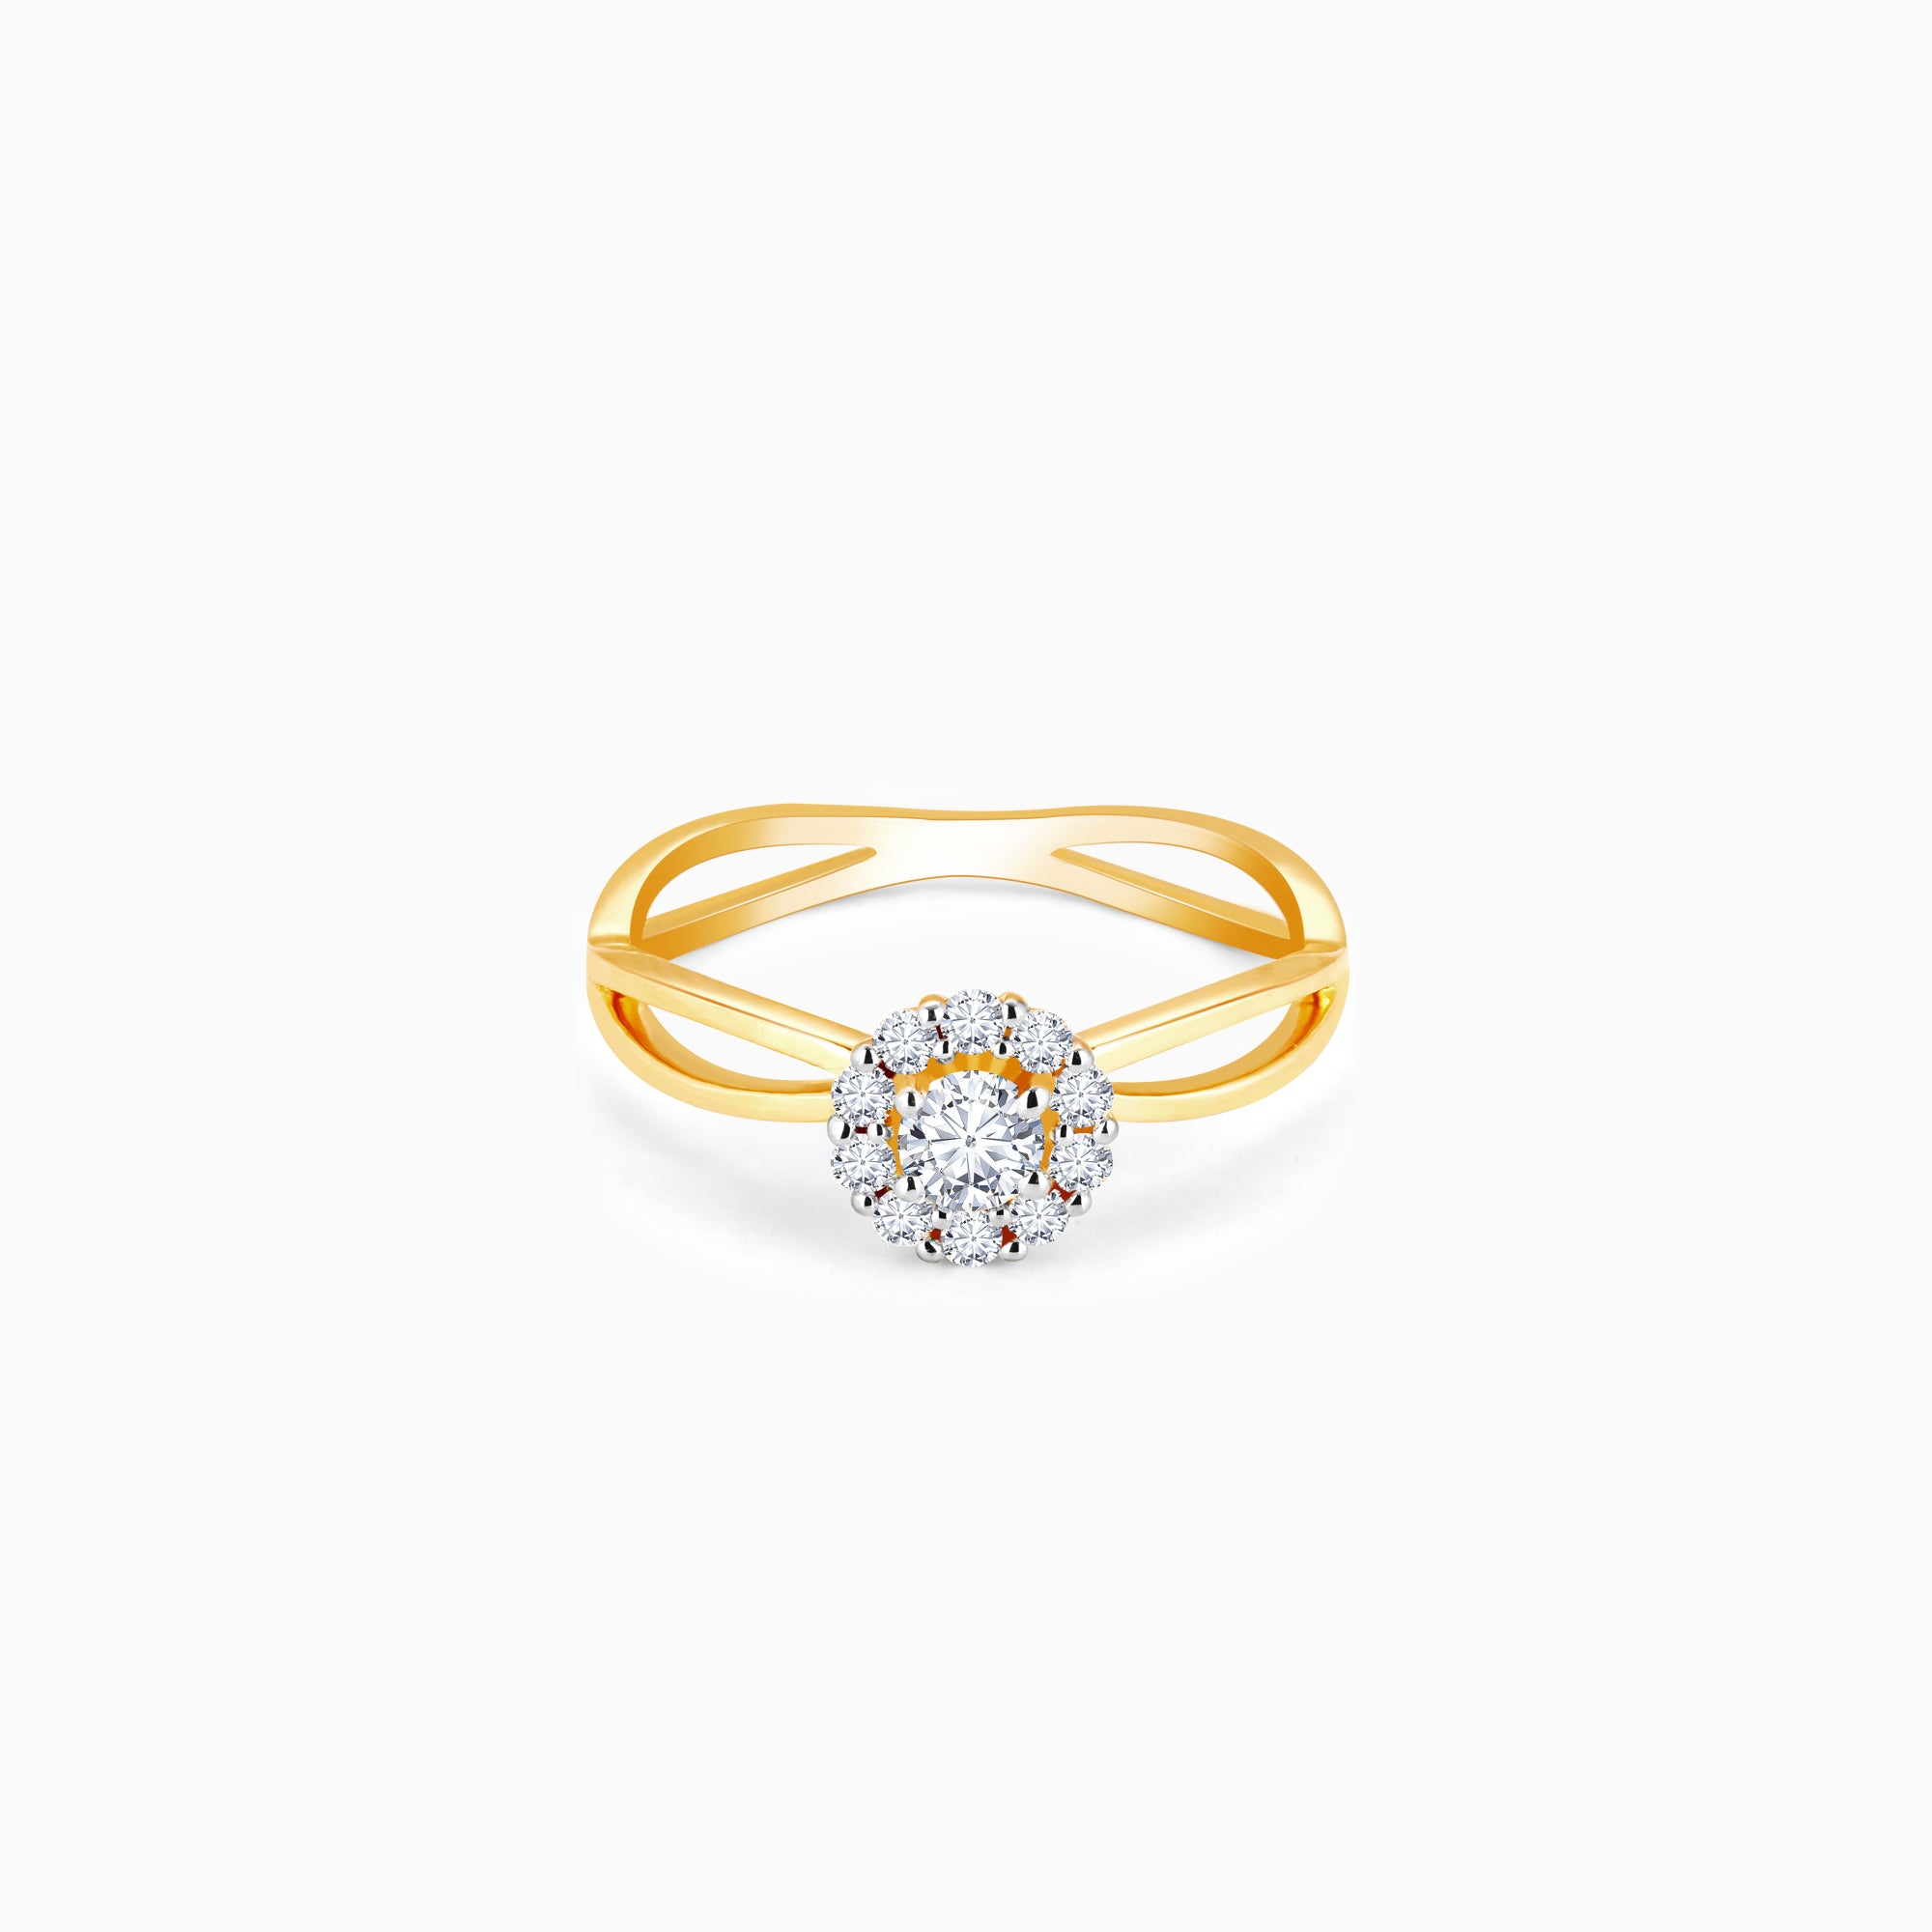 Buy quality 22K Gold Modern CZ Diamond Ring MGA - GRG0256 in Amreli